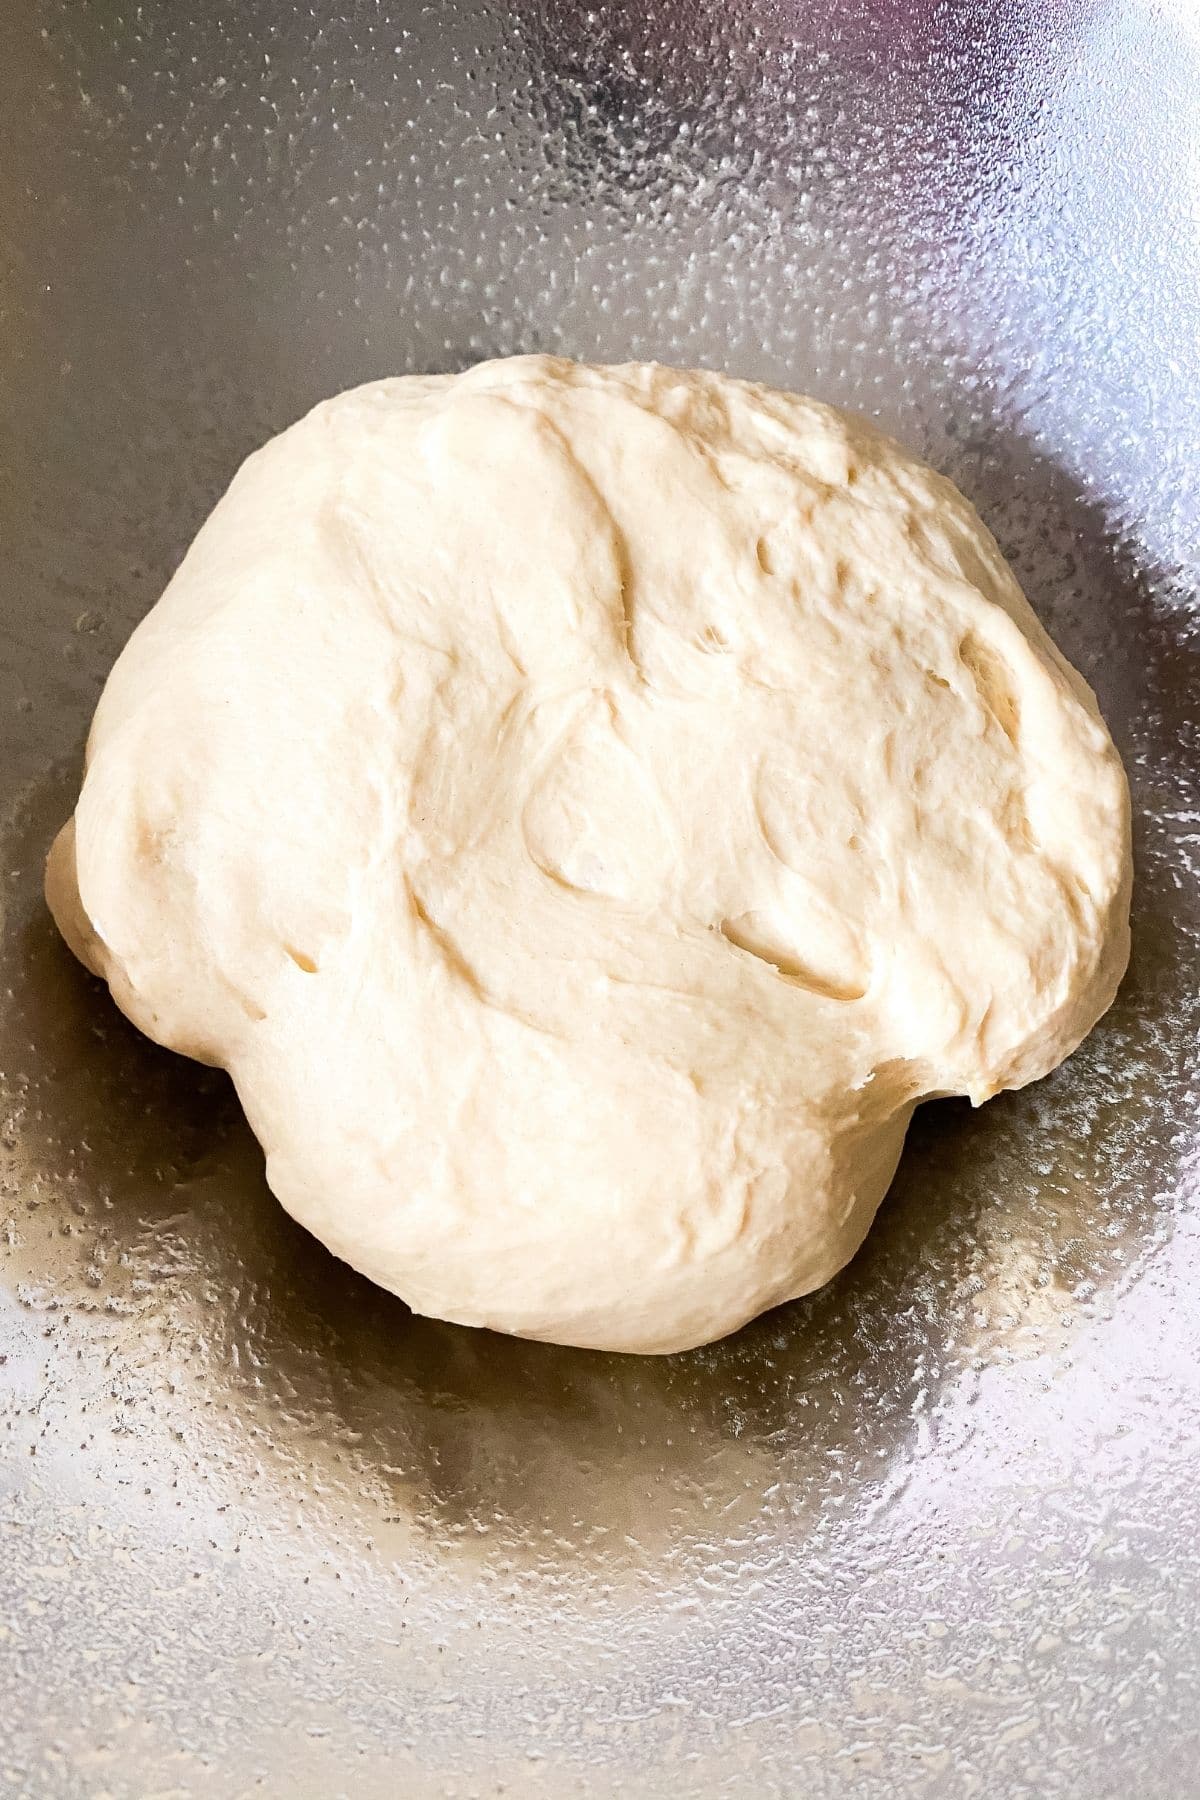 Ball of Hawaiian roll dough